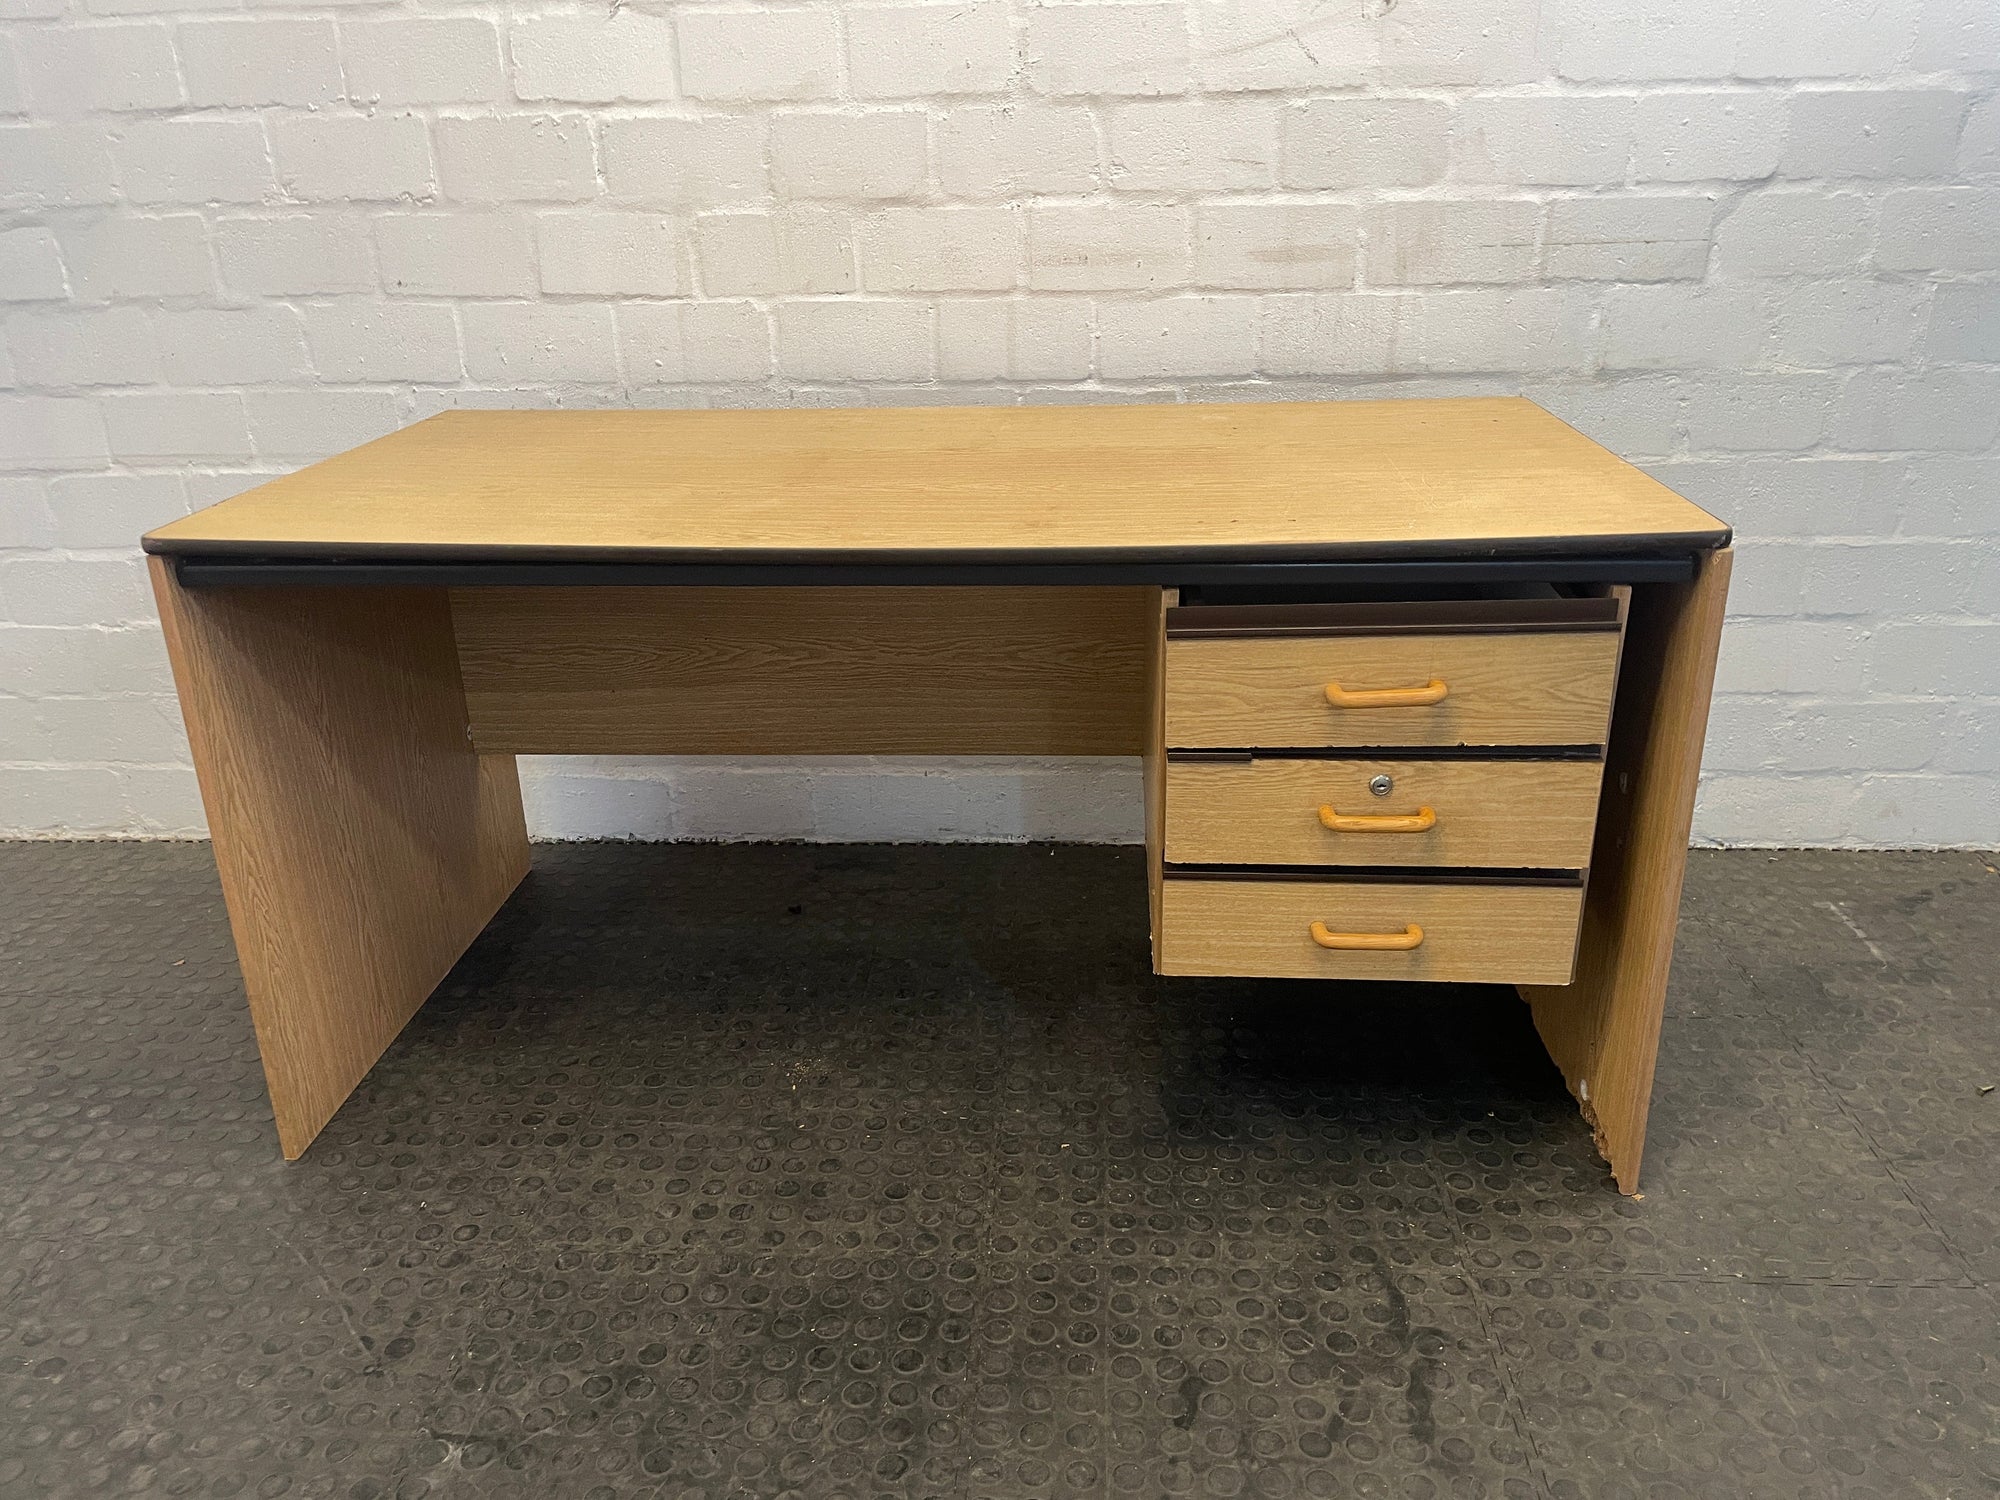 Straight Desk With Three Drawers (Slight Damage) - REDUCED